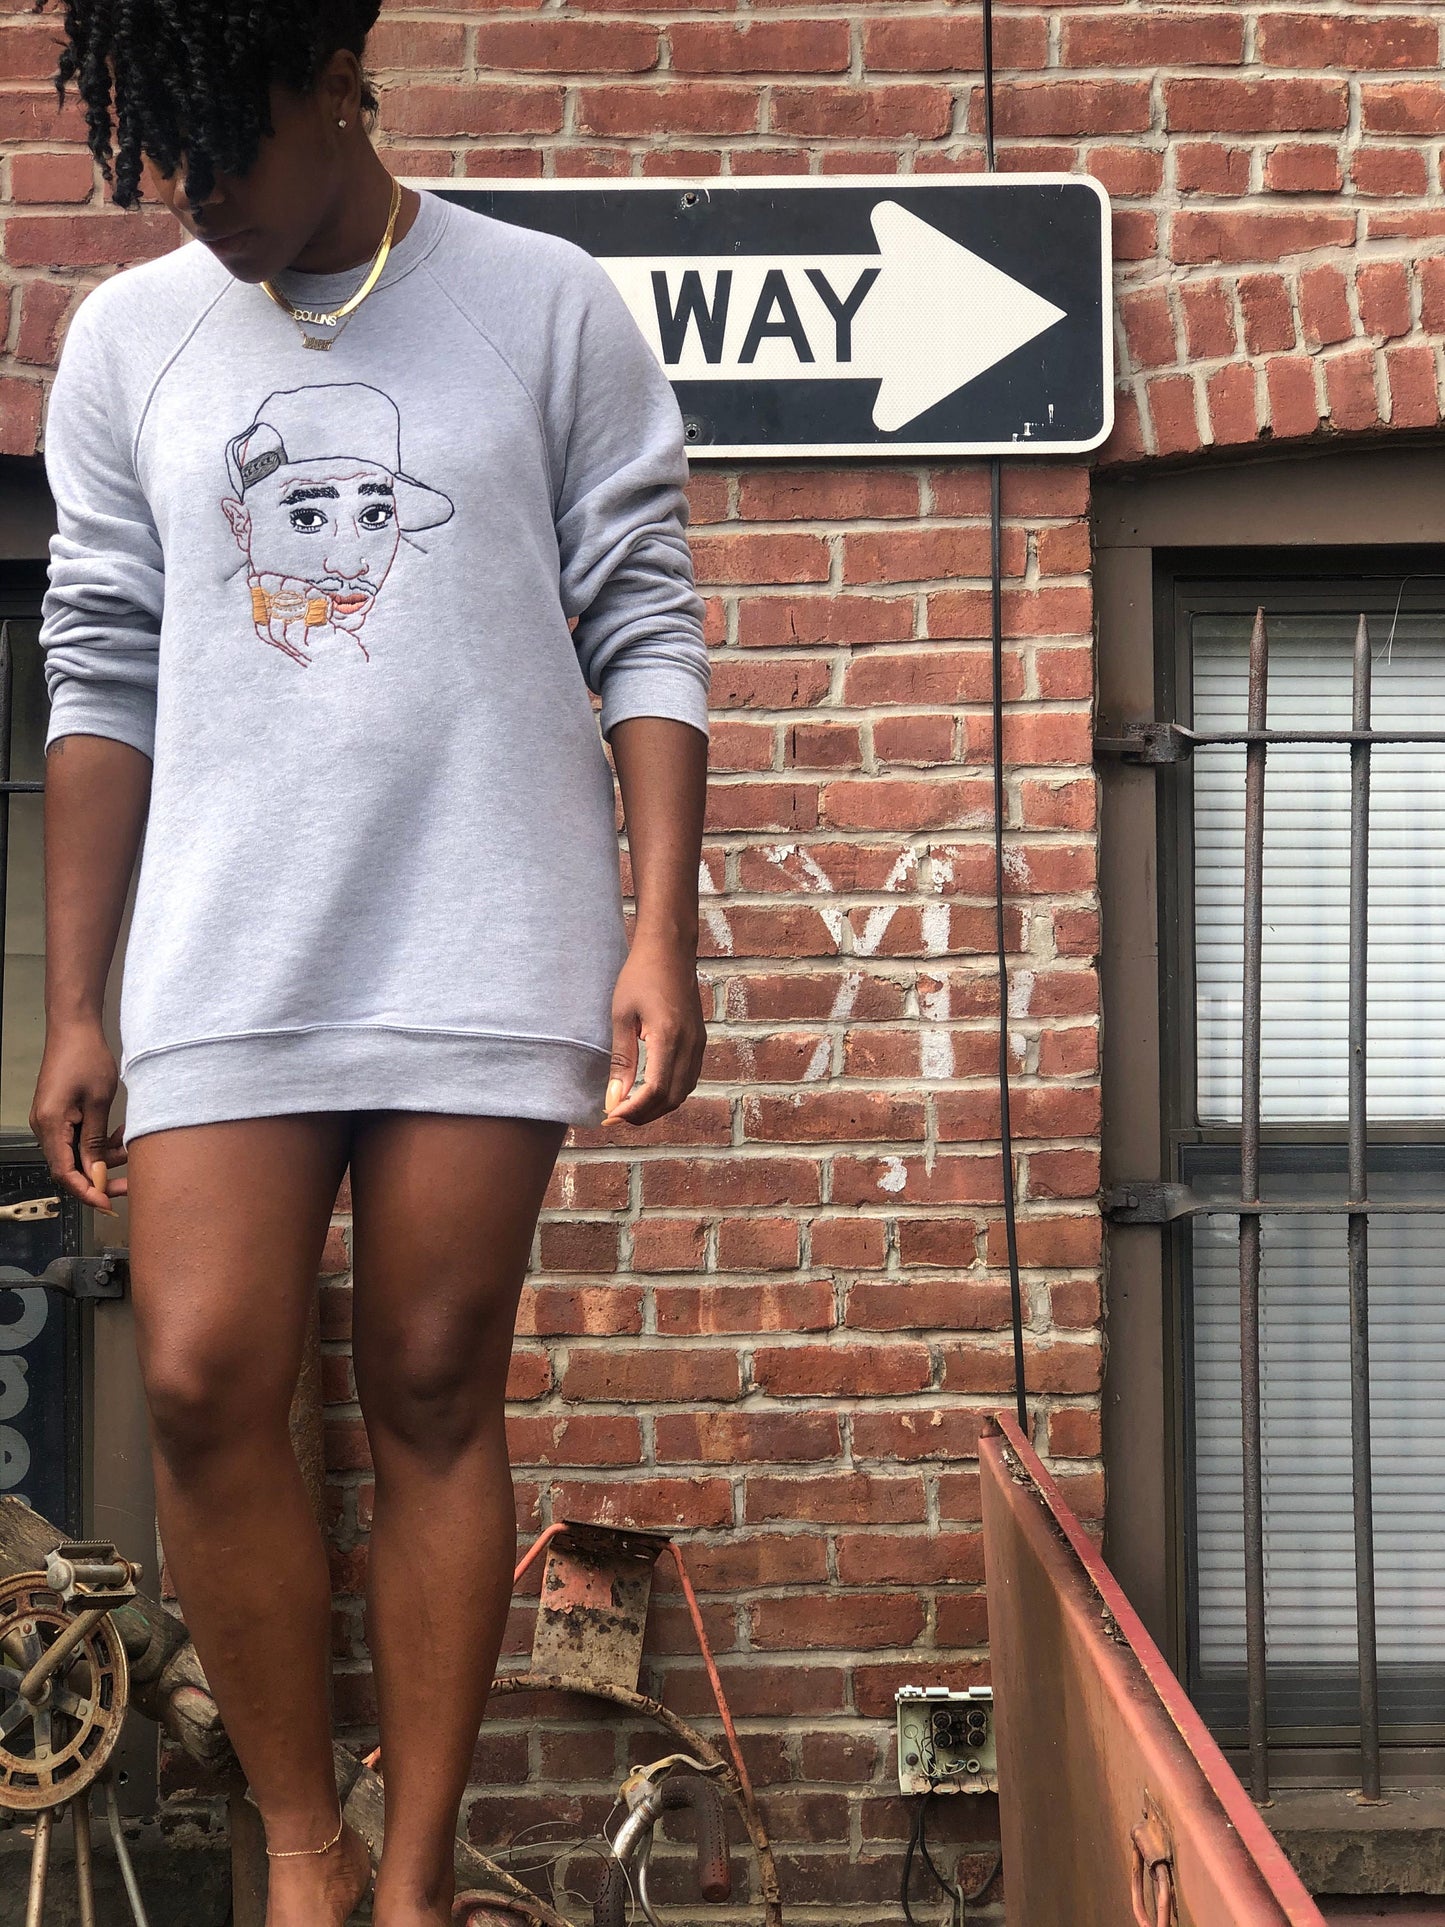 Tupac Embroidered Raglan Sweatshirt